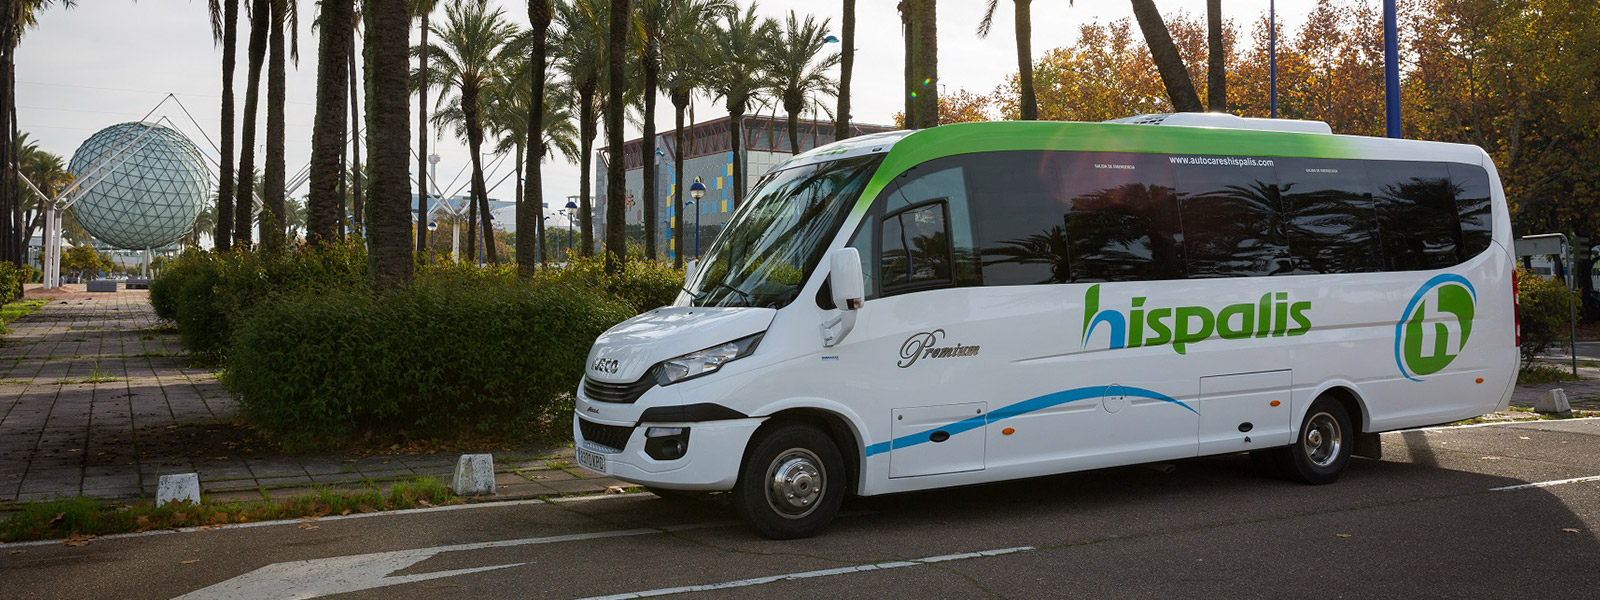 Microbus en la Isla de la Cartuja de Sevilla